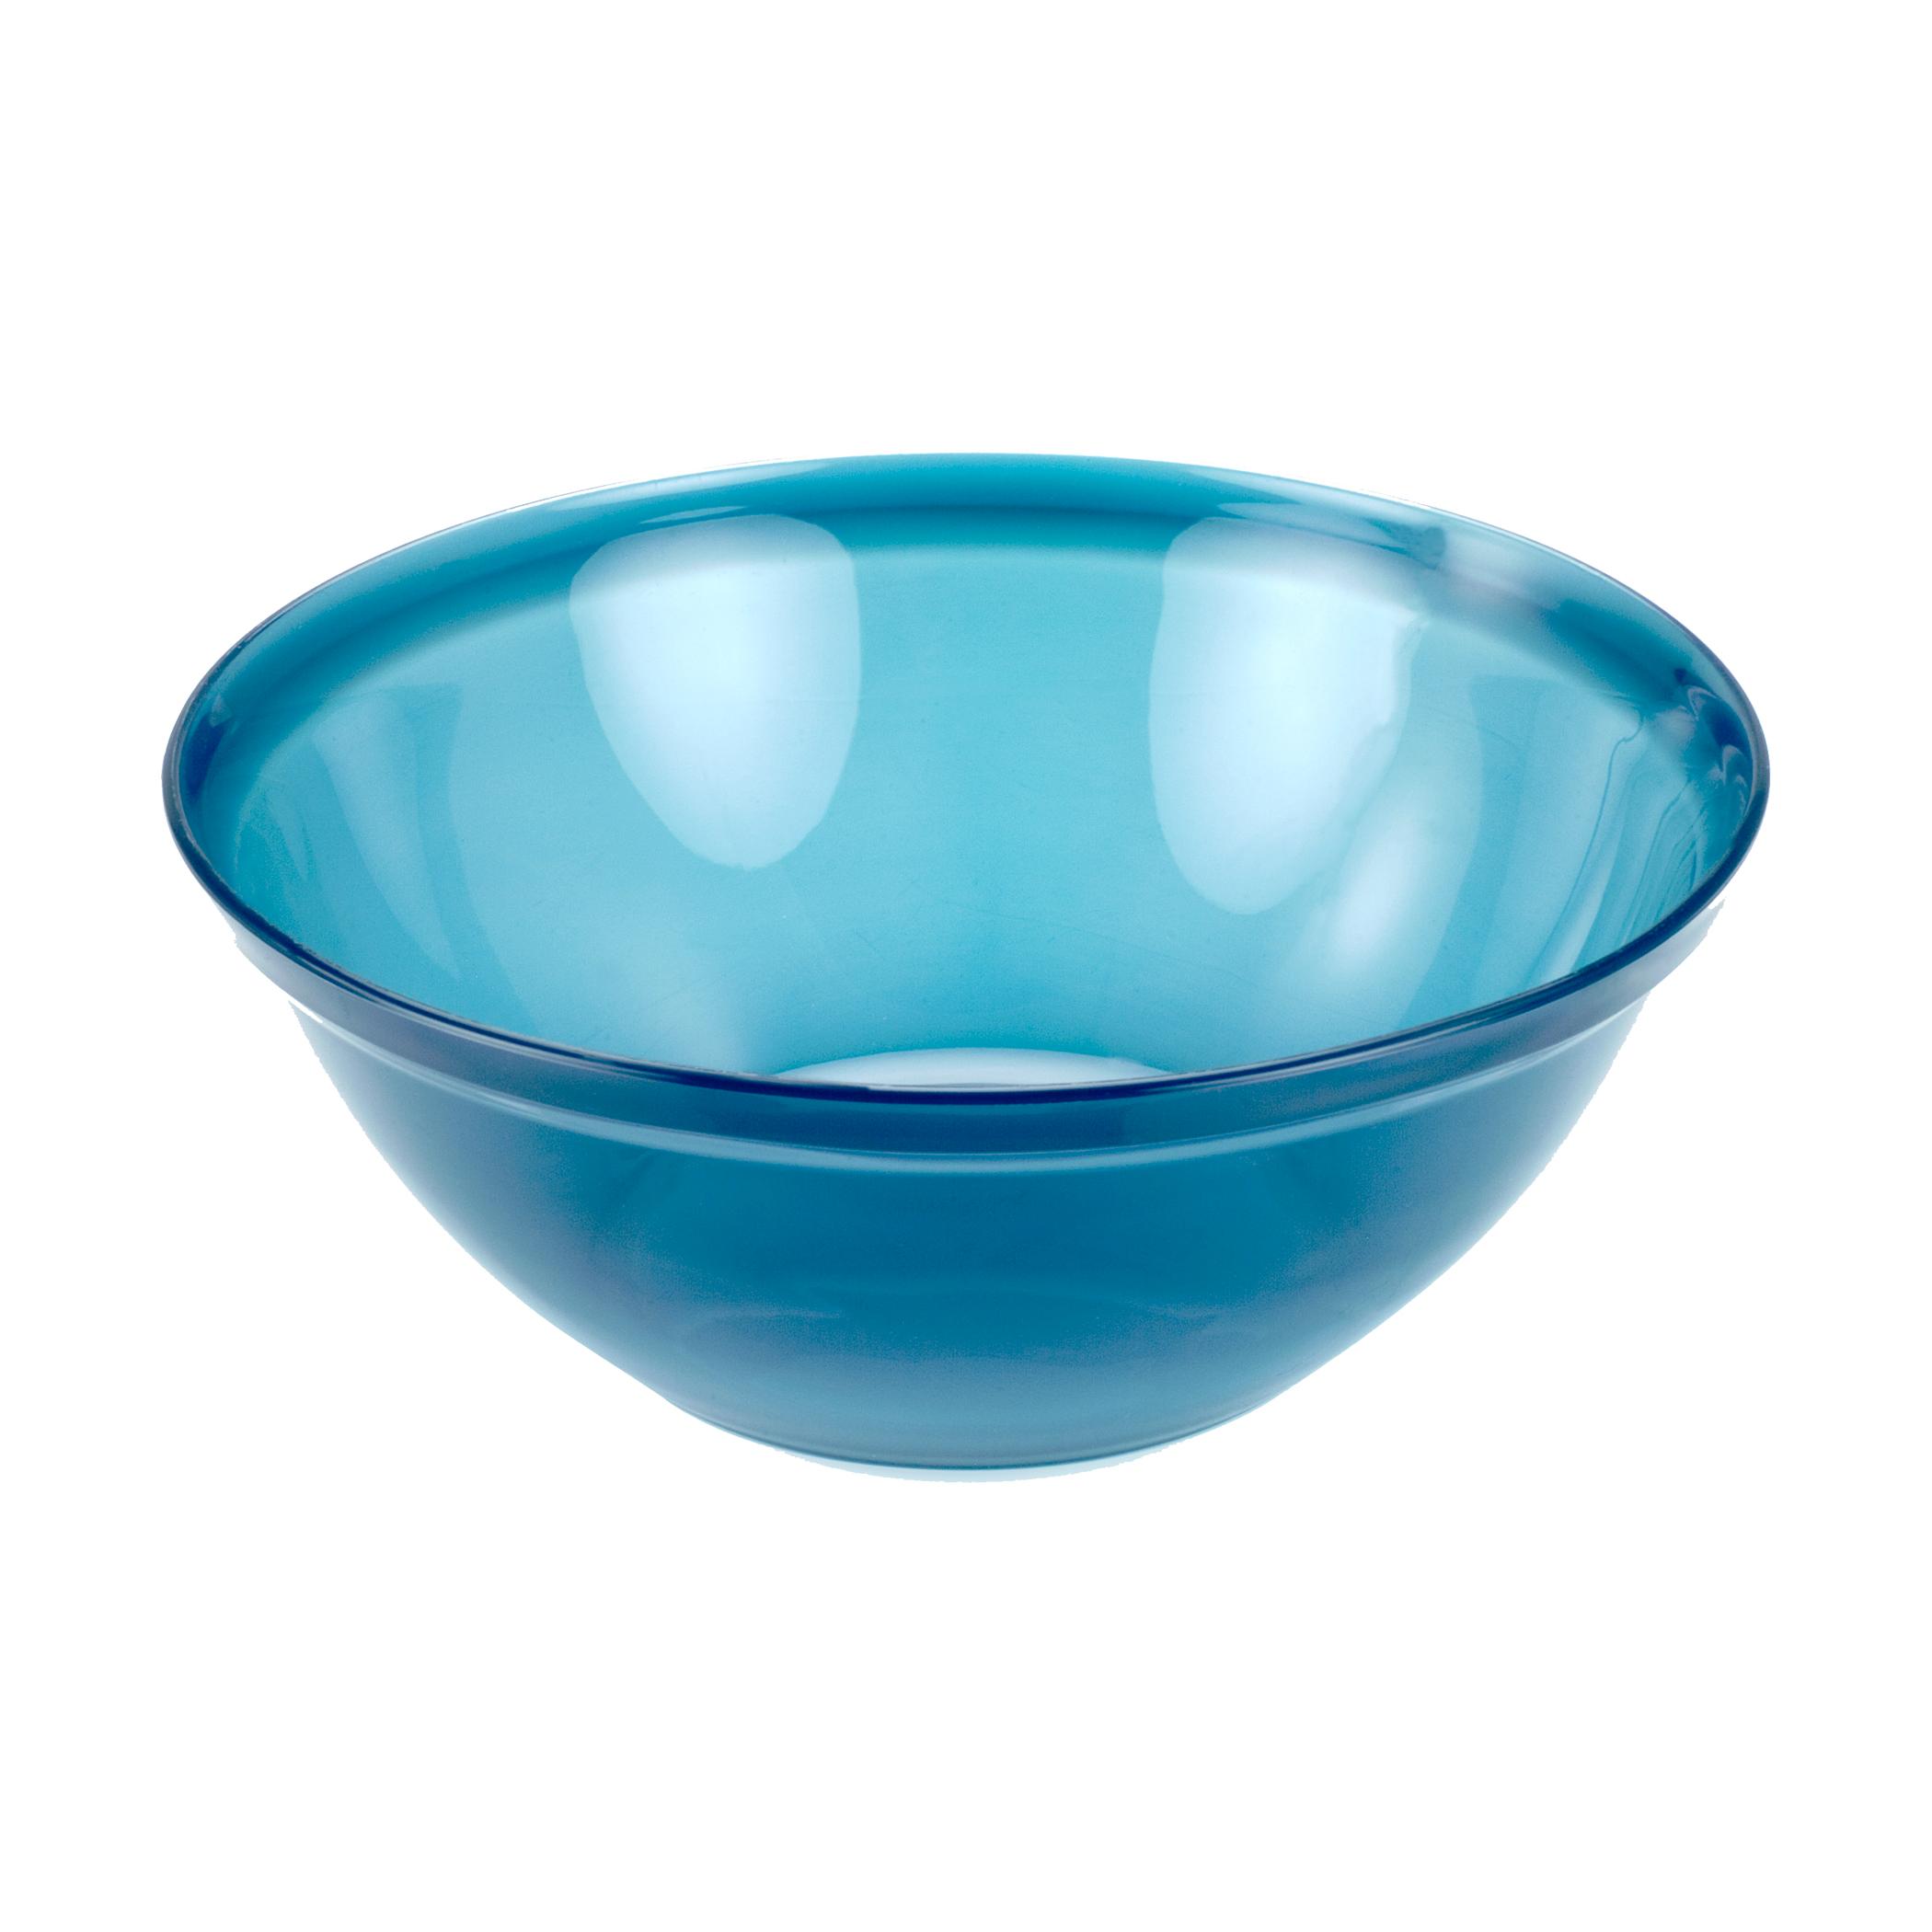  Gsi Infinity Blue Bowl